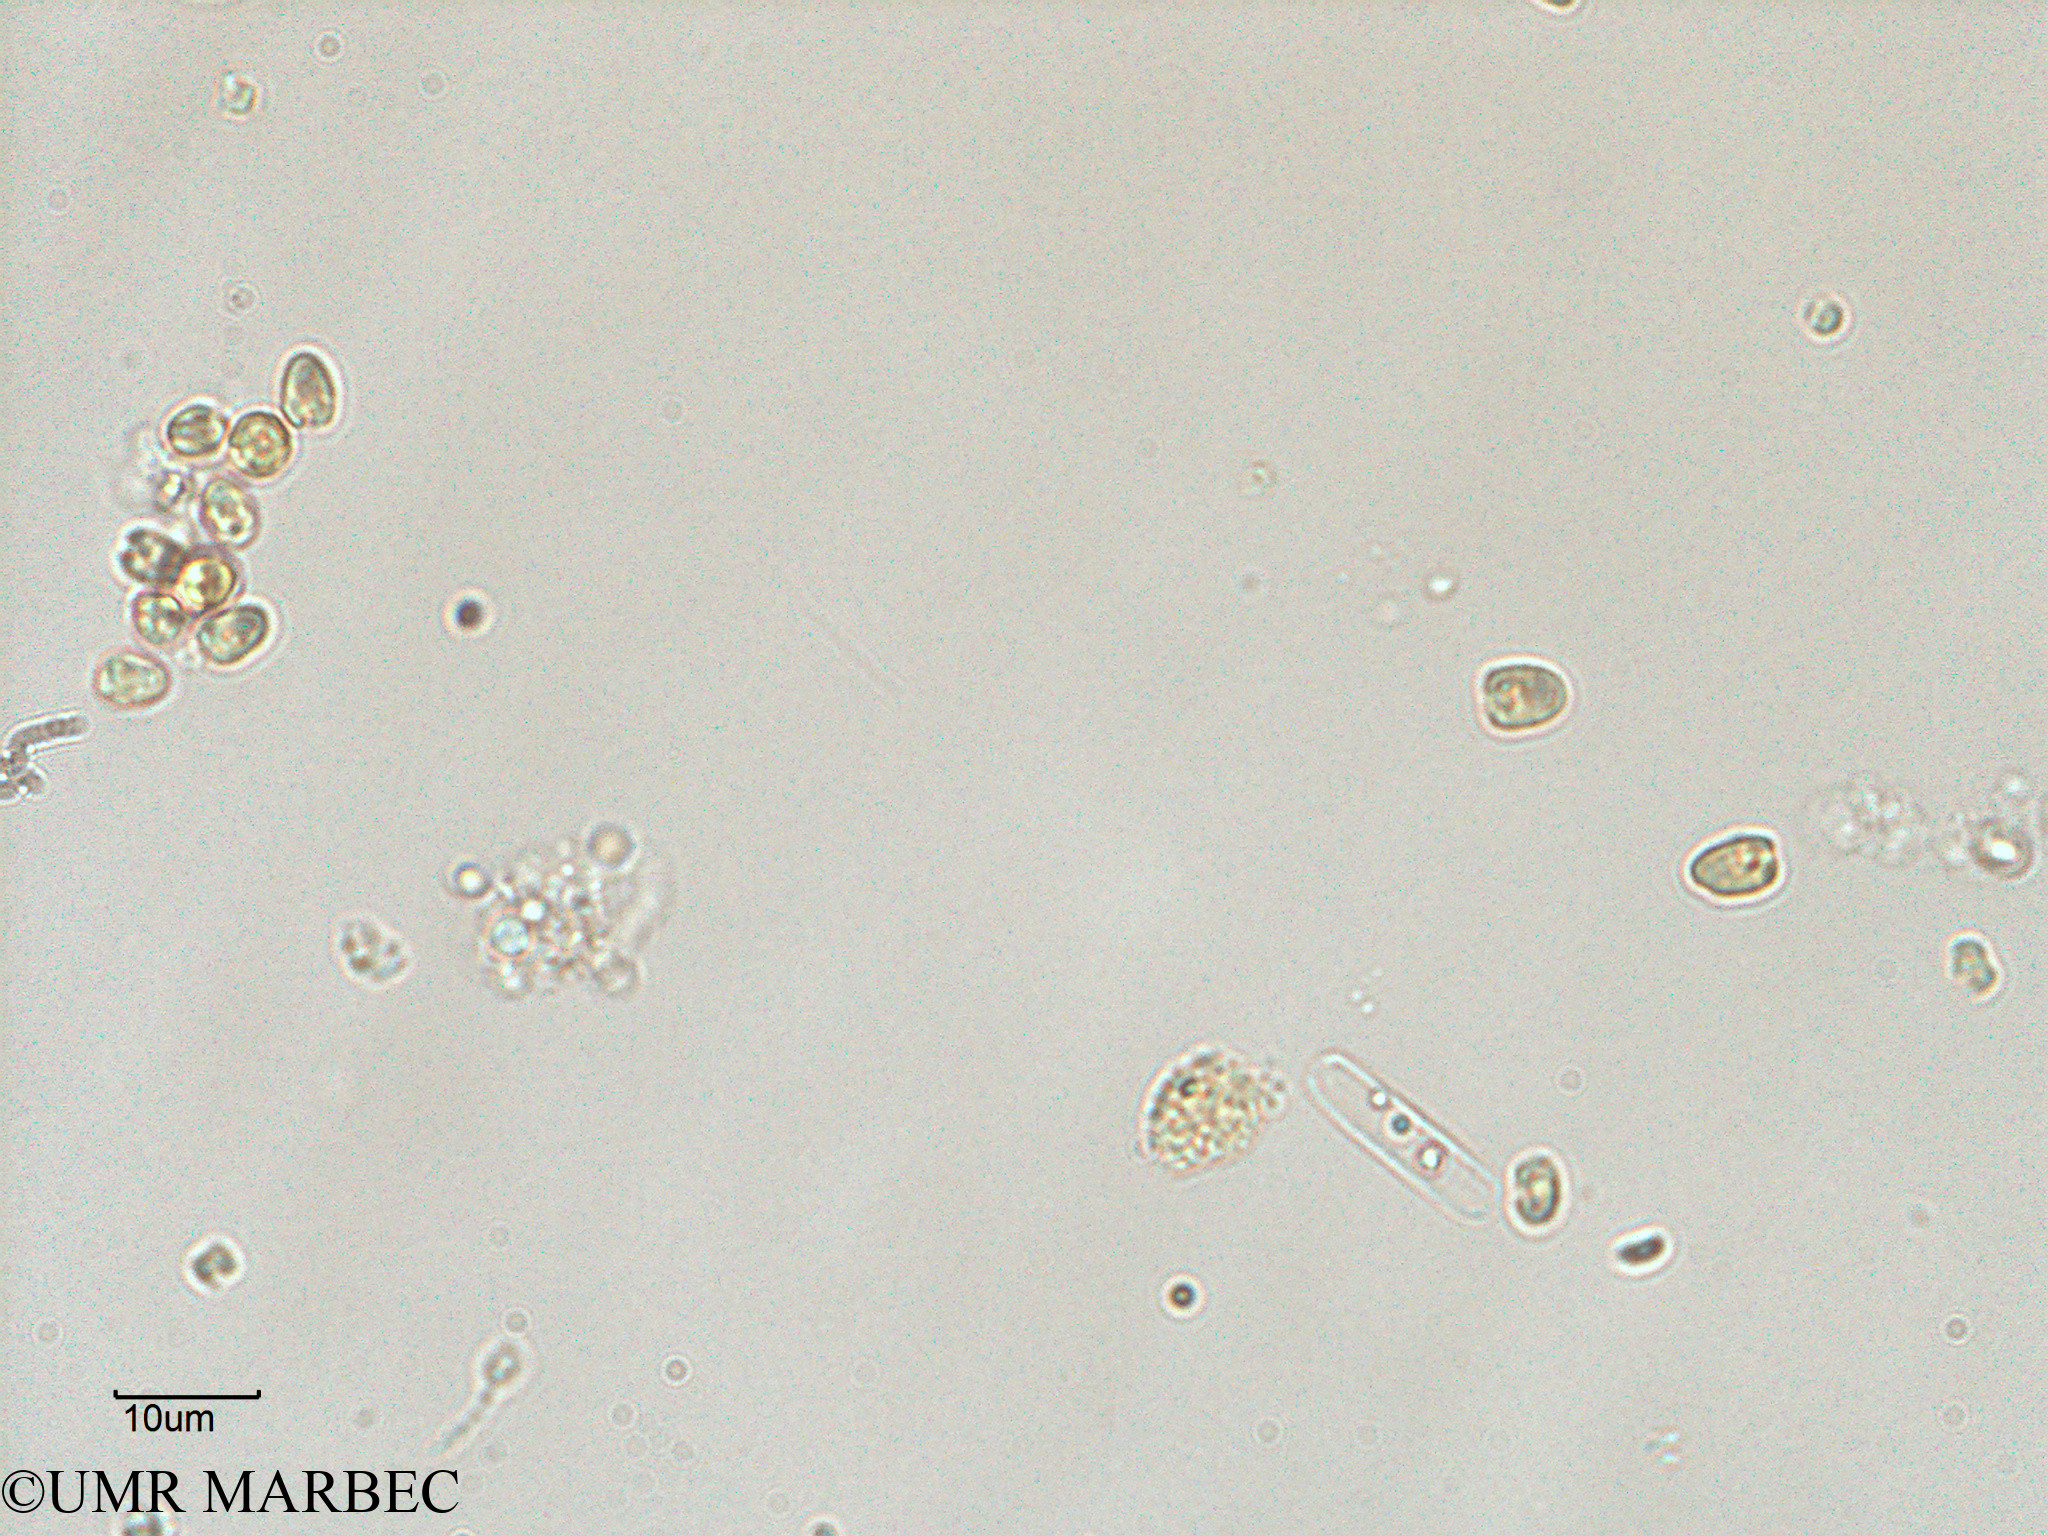 phyto/Scattered_Islands/juan_de_nova/COMMA2 November 2013/Nanoflagellé 9 (ancien Flagellé 2-8).tif(copy).jpg